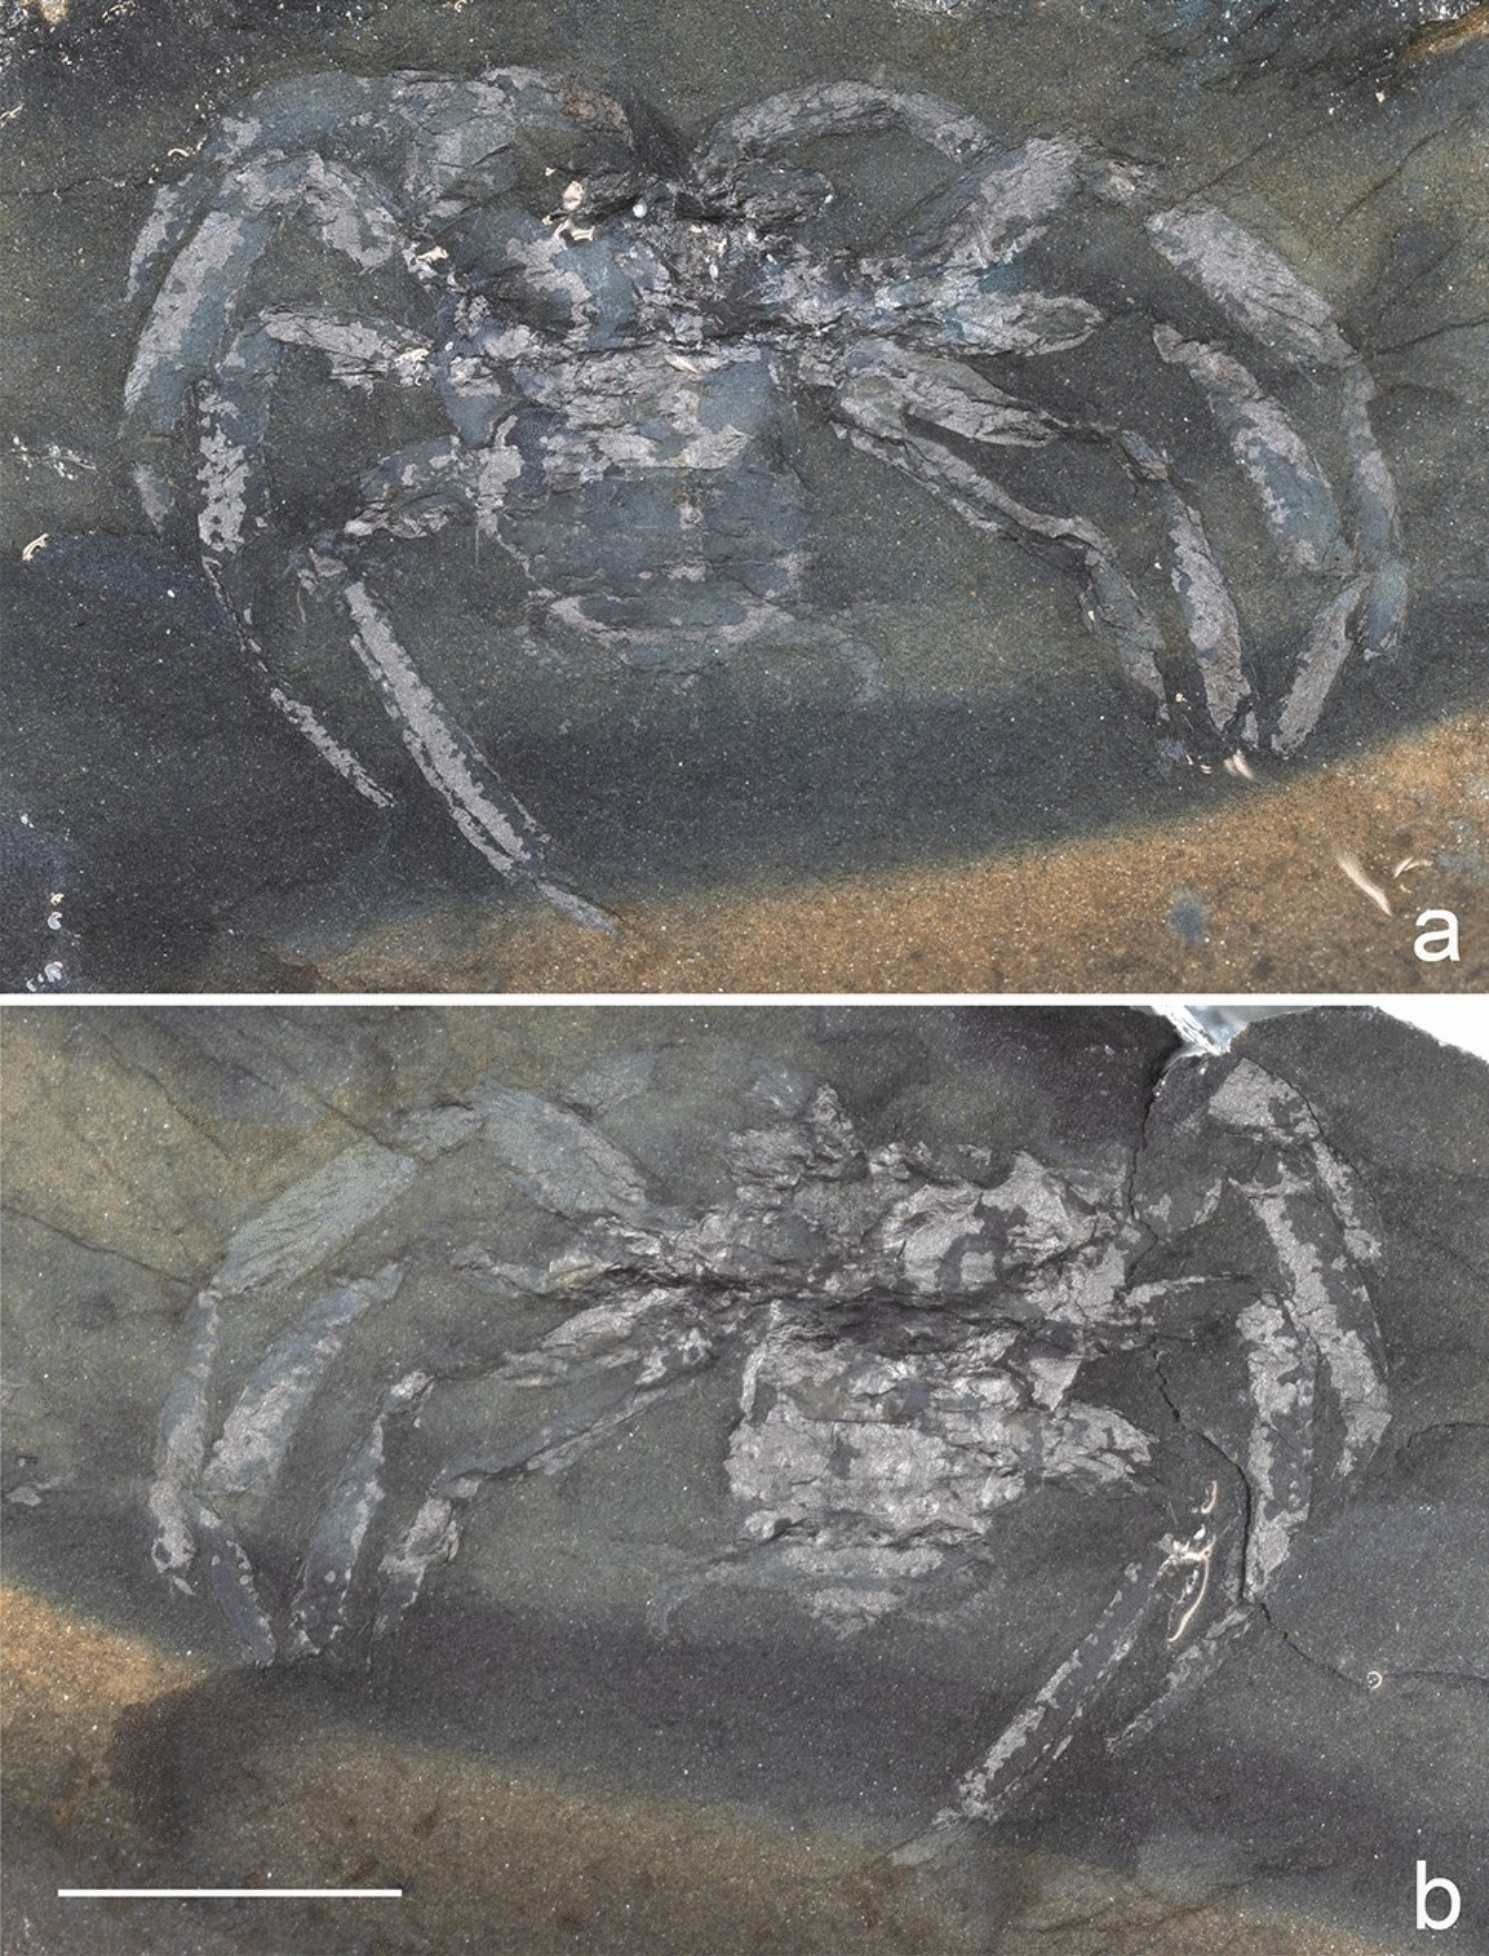 Arthrolycosa wolterbeeki sp. nov., den ældste fossile edderkop (Arachnida: Araneae) fra Tyskland, fra det sene karbon af Piesberg nær Osnabruck, Niedersachsen.